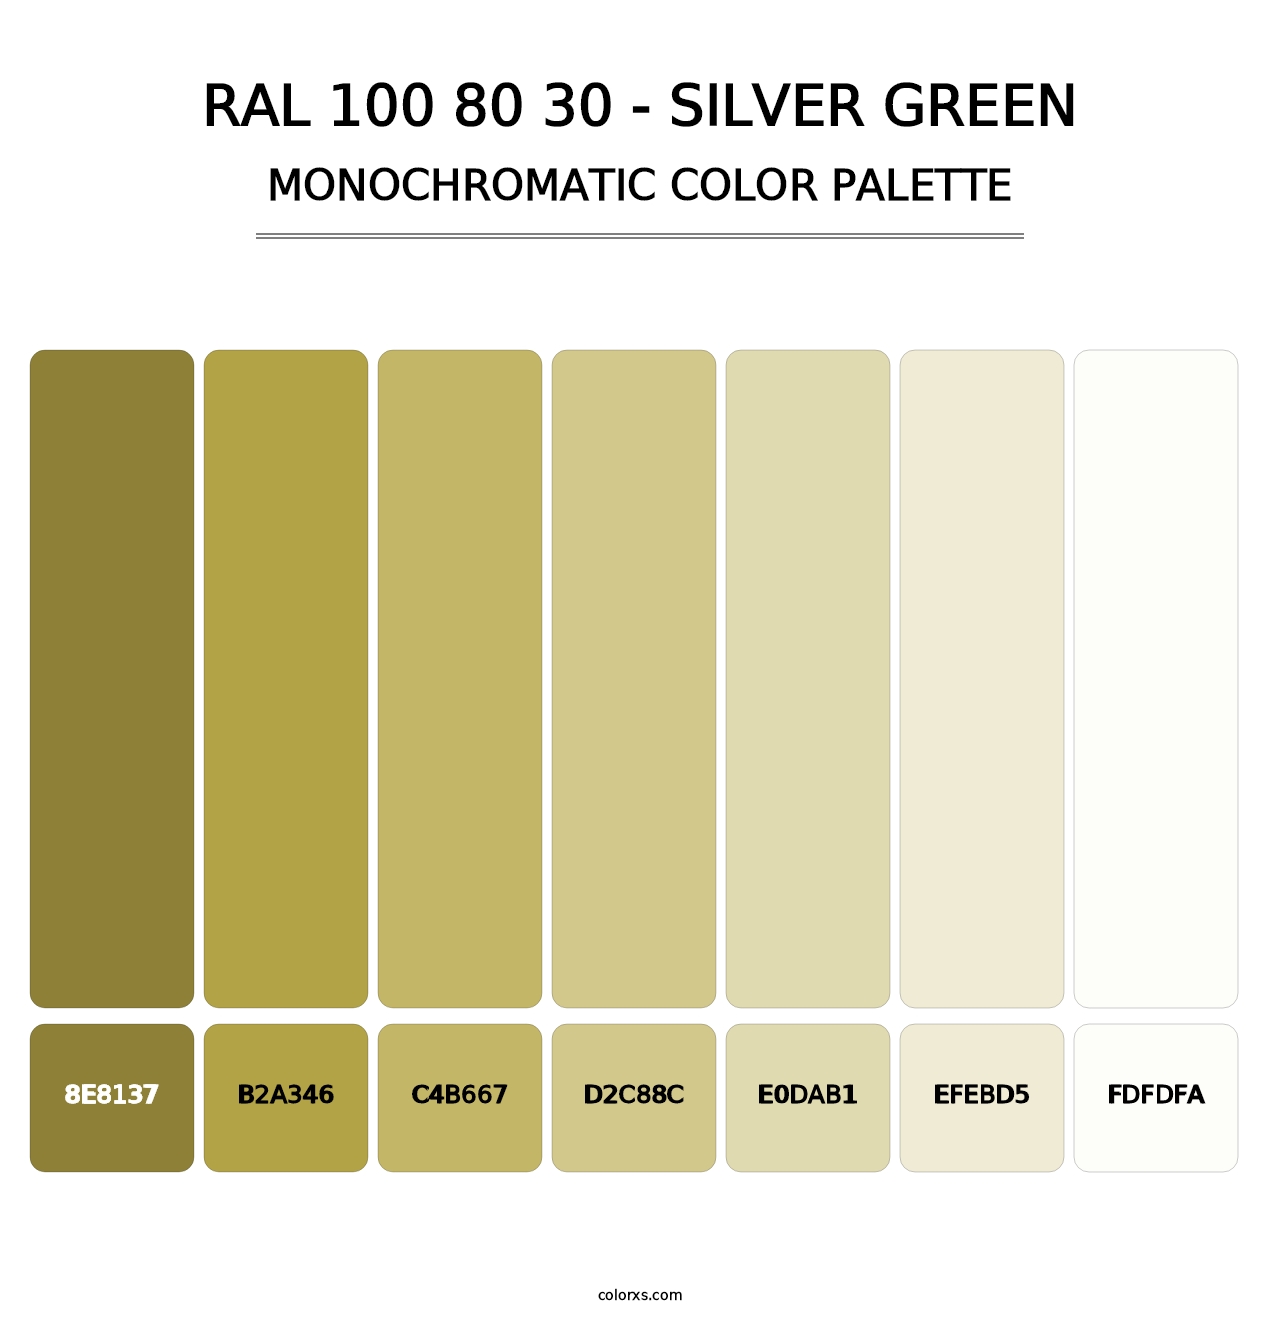 RAL 100 80 30 - Silver Green - Monochromatic Color Palette